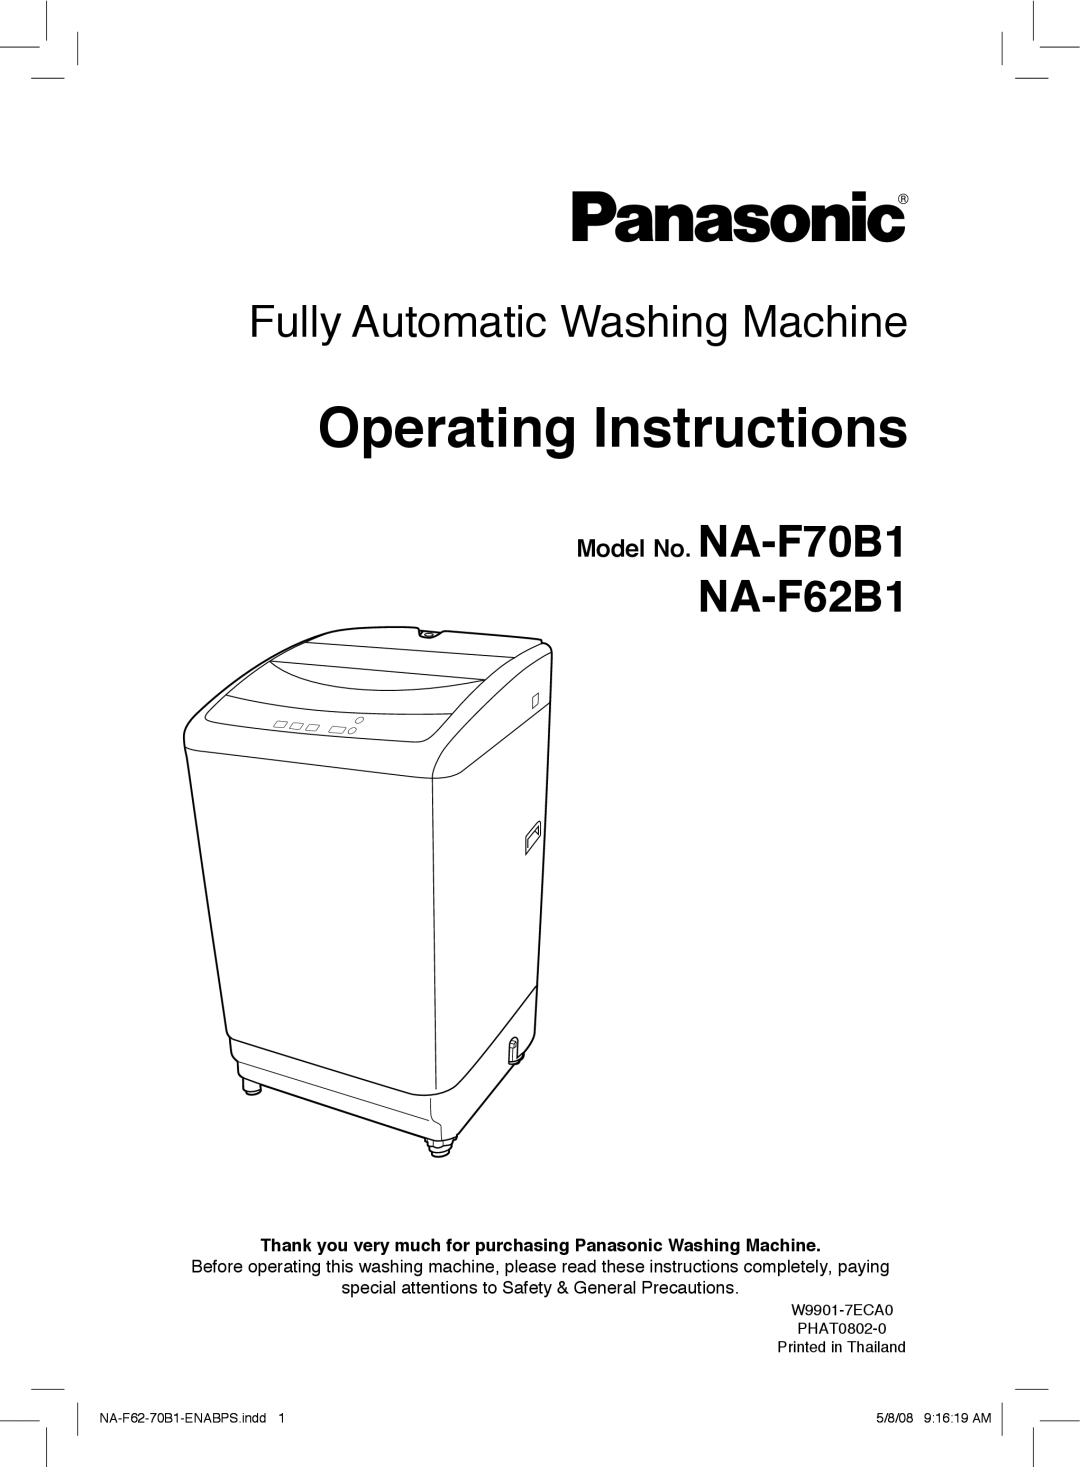 Panasonic NA-F62B1 operating instructions Model No. NA-F70B1, Thank you very much for purchasing Panasonic Washing Machine 